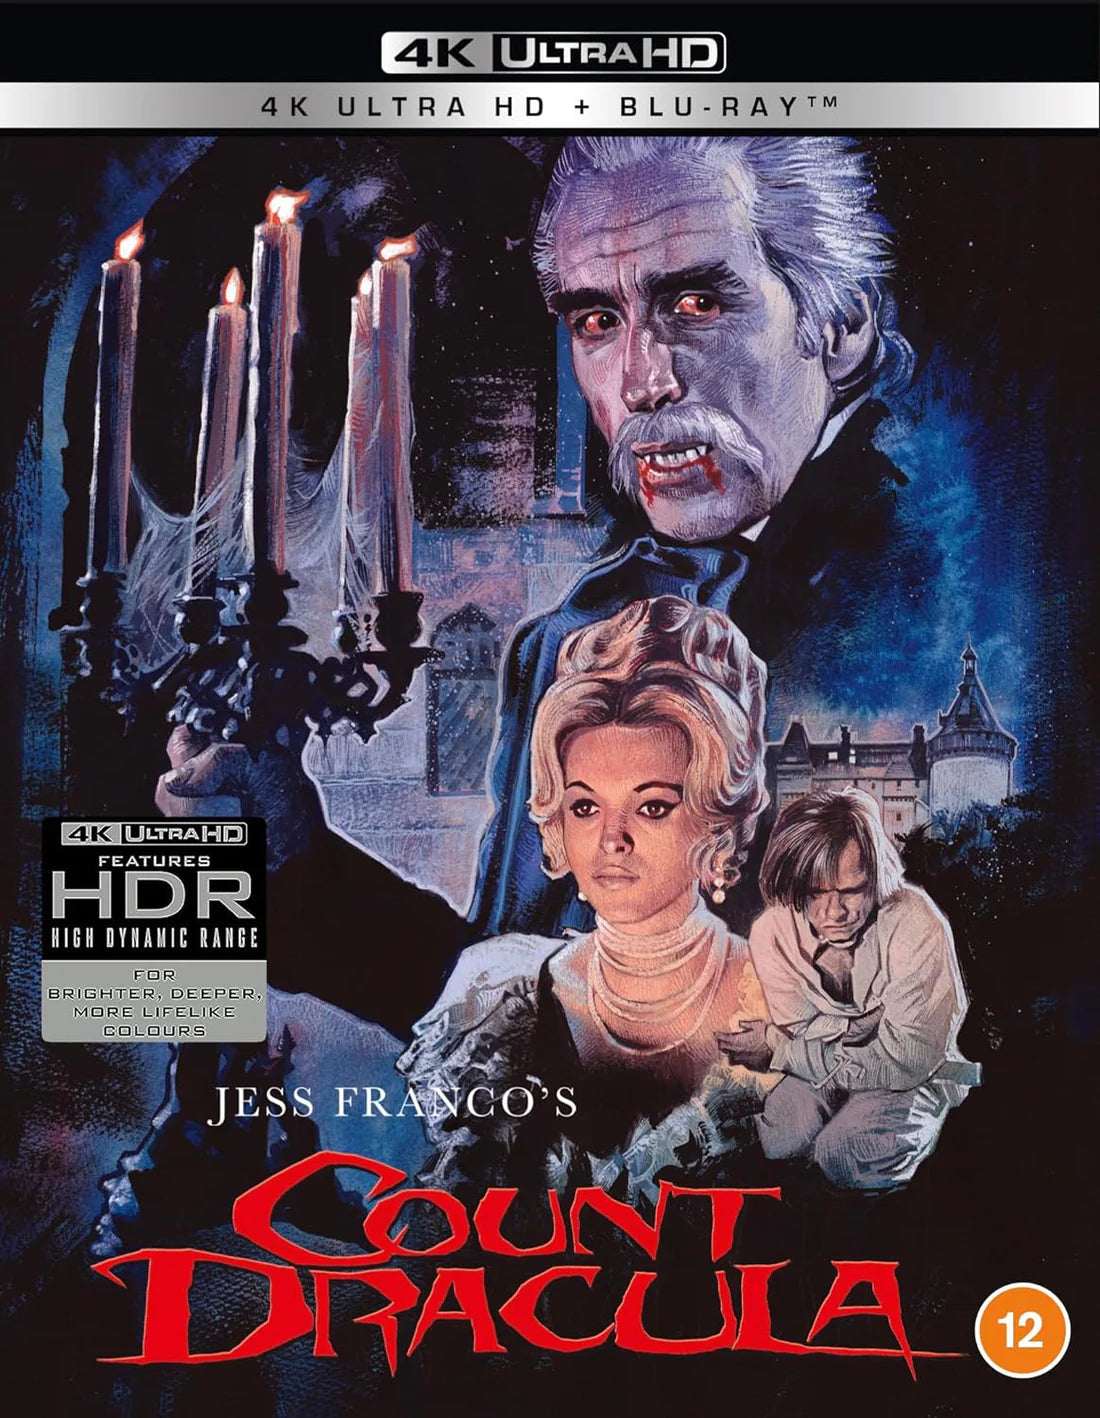 Jess Franco's Count Dracula (1970) w/ Slipcover 88 Films UK - 4K UHD / Blu-ray Region Free